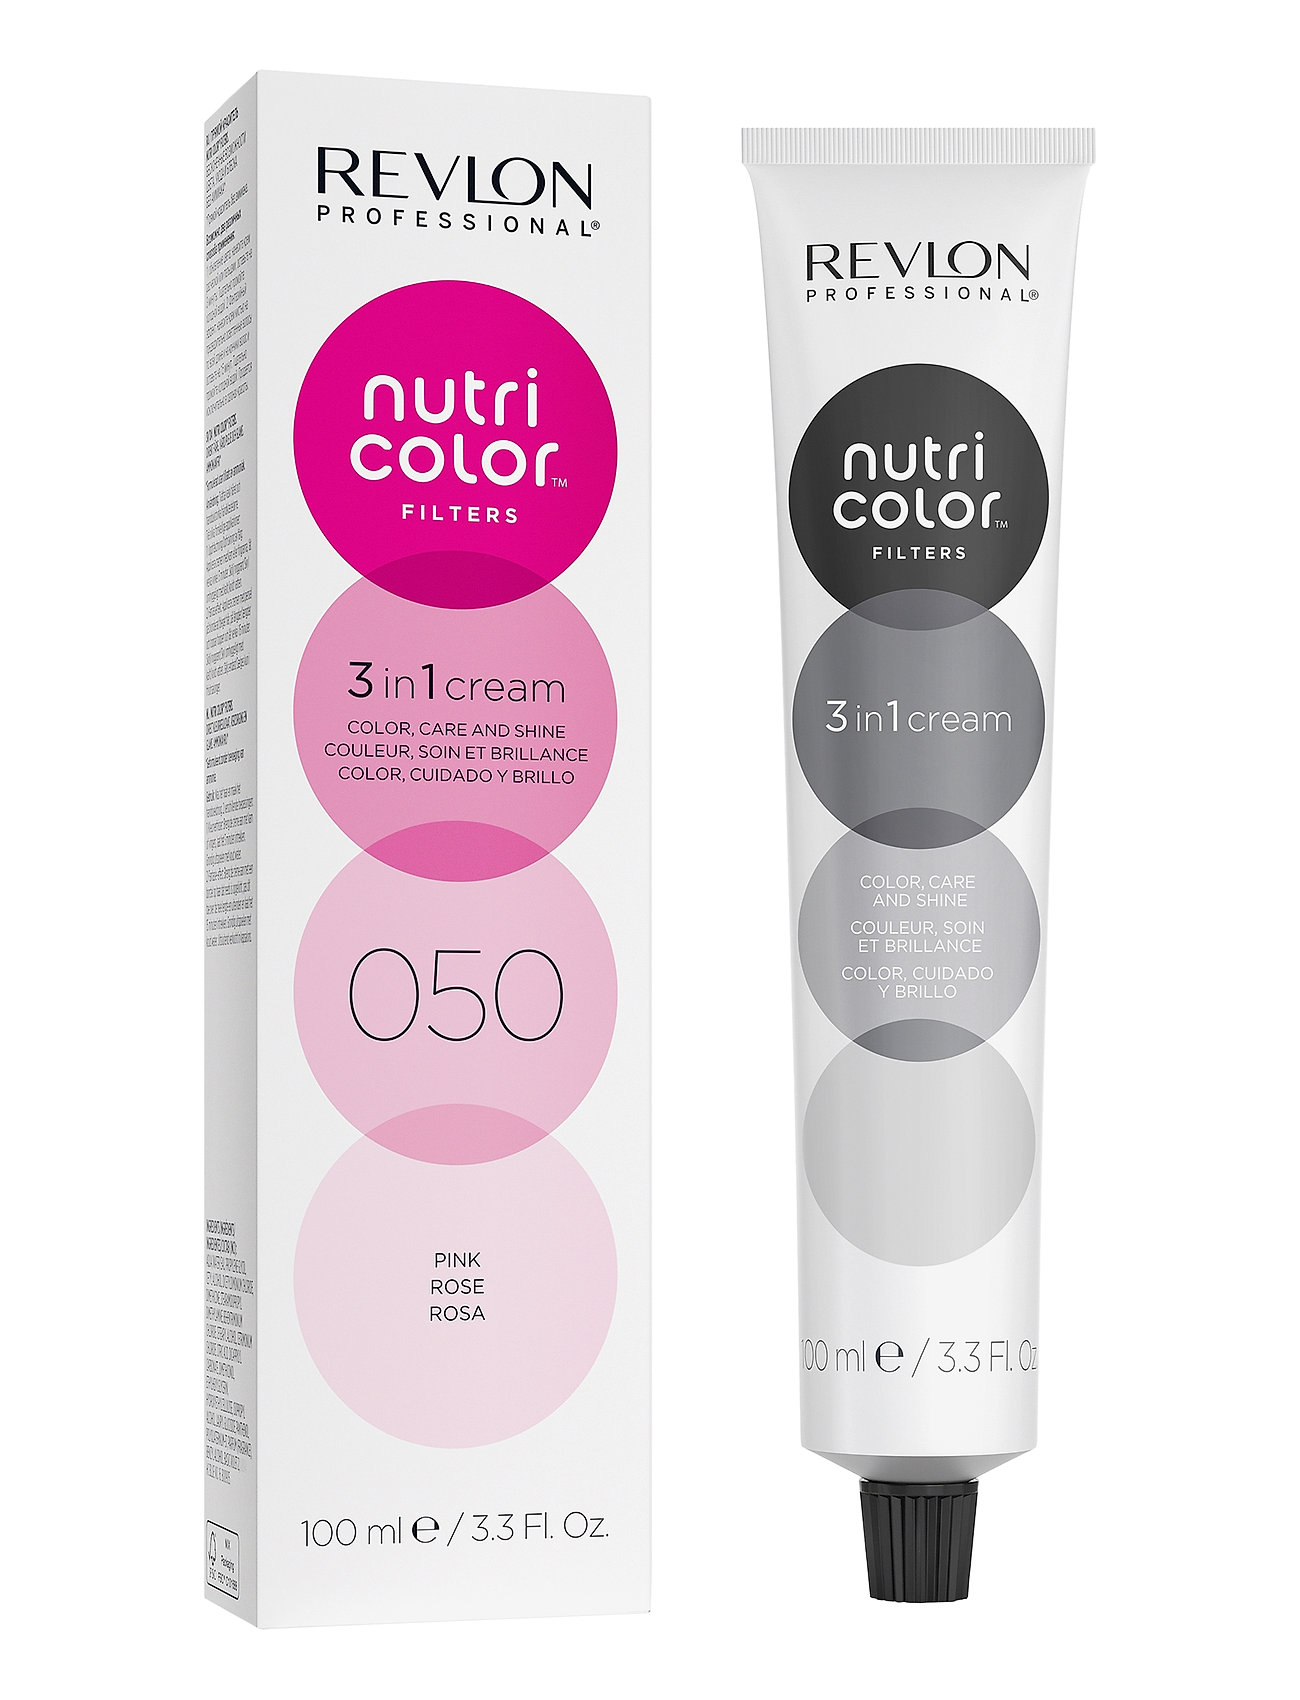 Nutri Color Filters 050 Beauty Women Hair Care Color Treatments Nude Revlon Professional